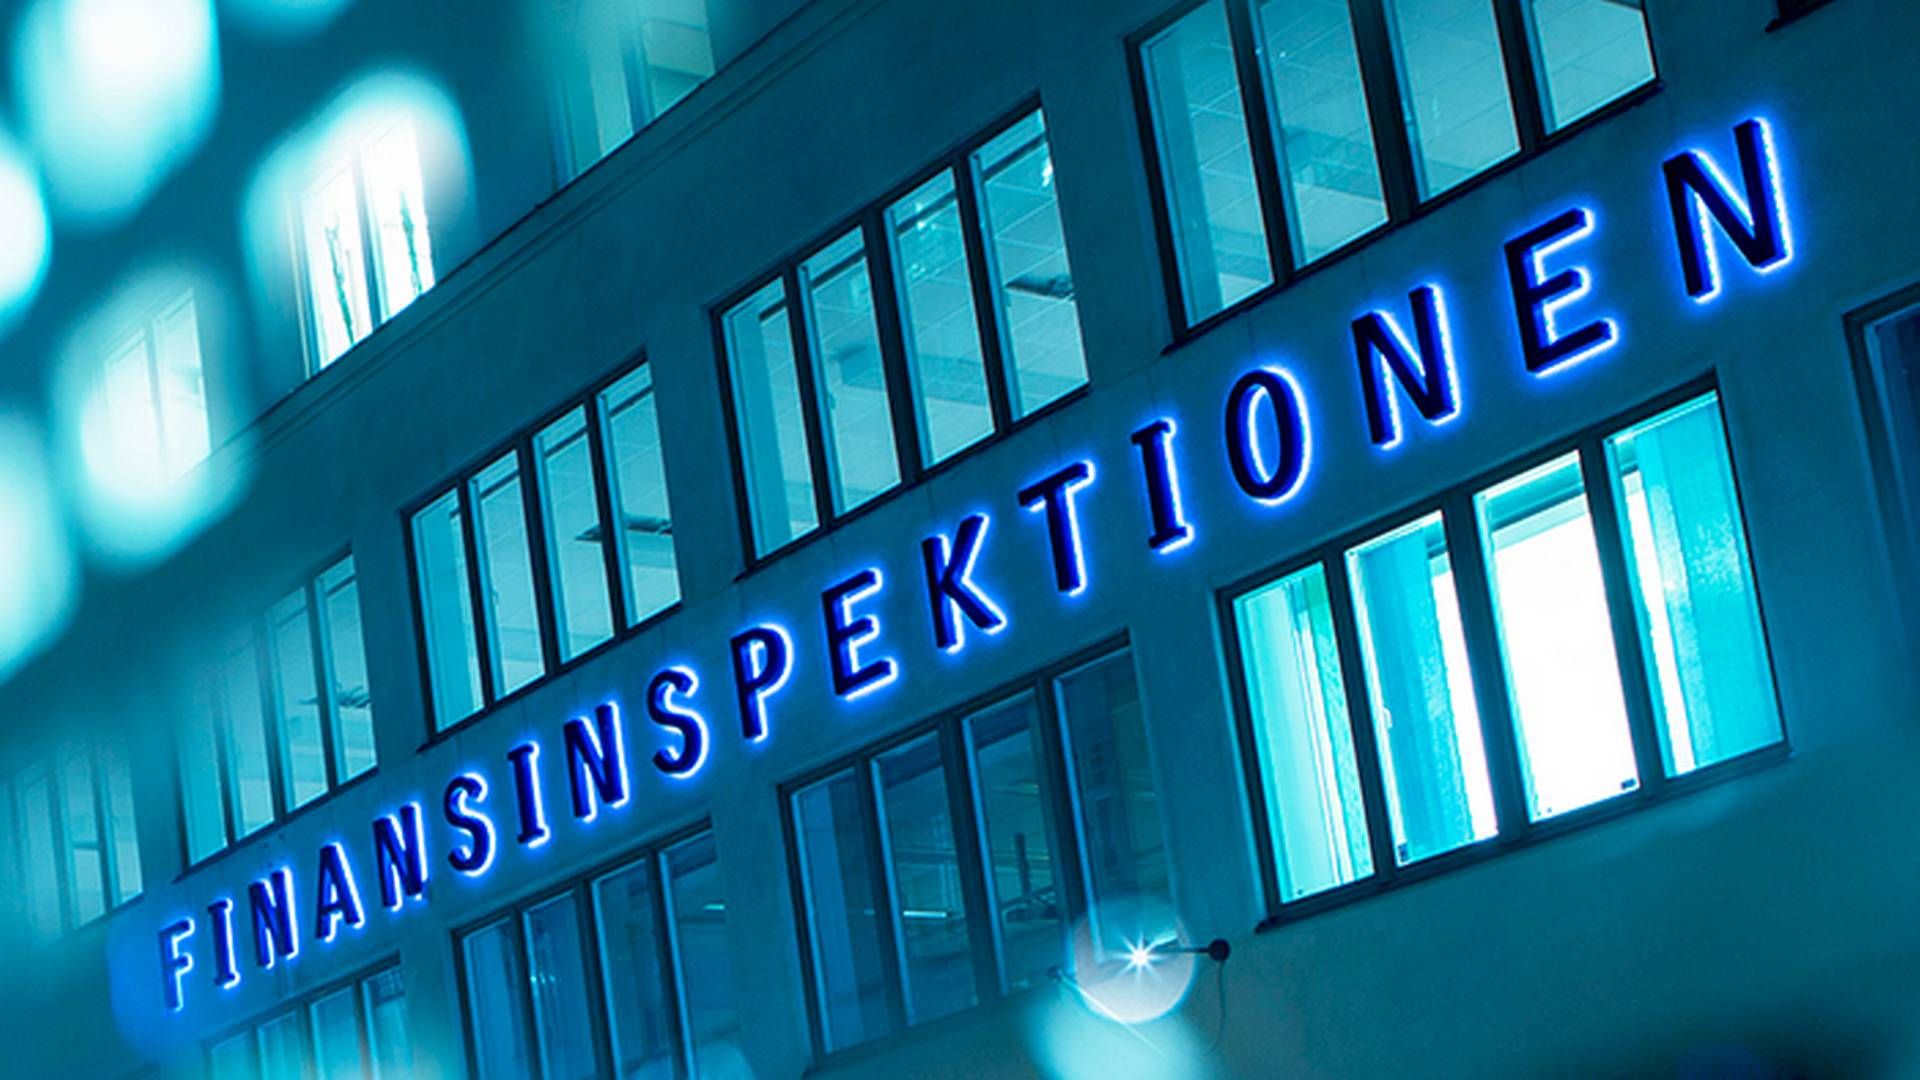 Sweden's financial supervisory authority, Finansinspektionen, is to investigate Alecta once again. | Photo: Finansinspektionen / PR